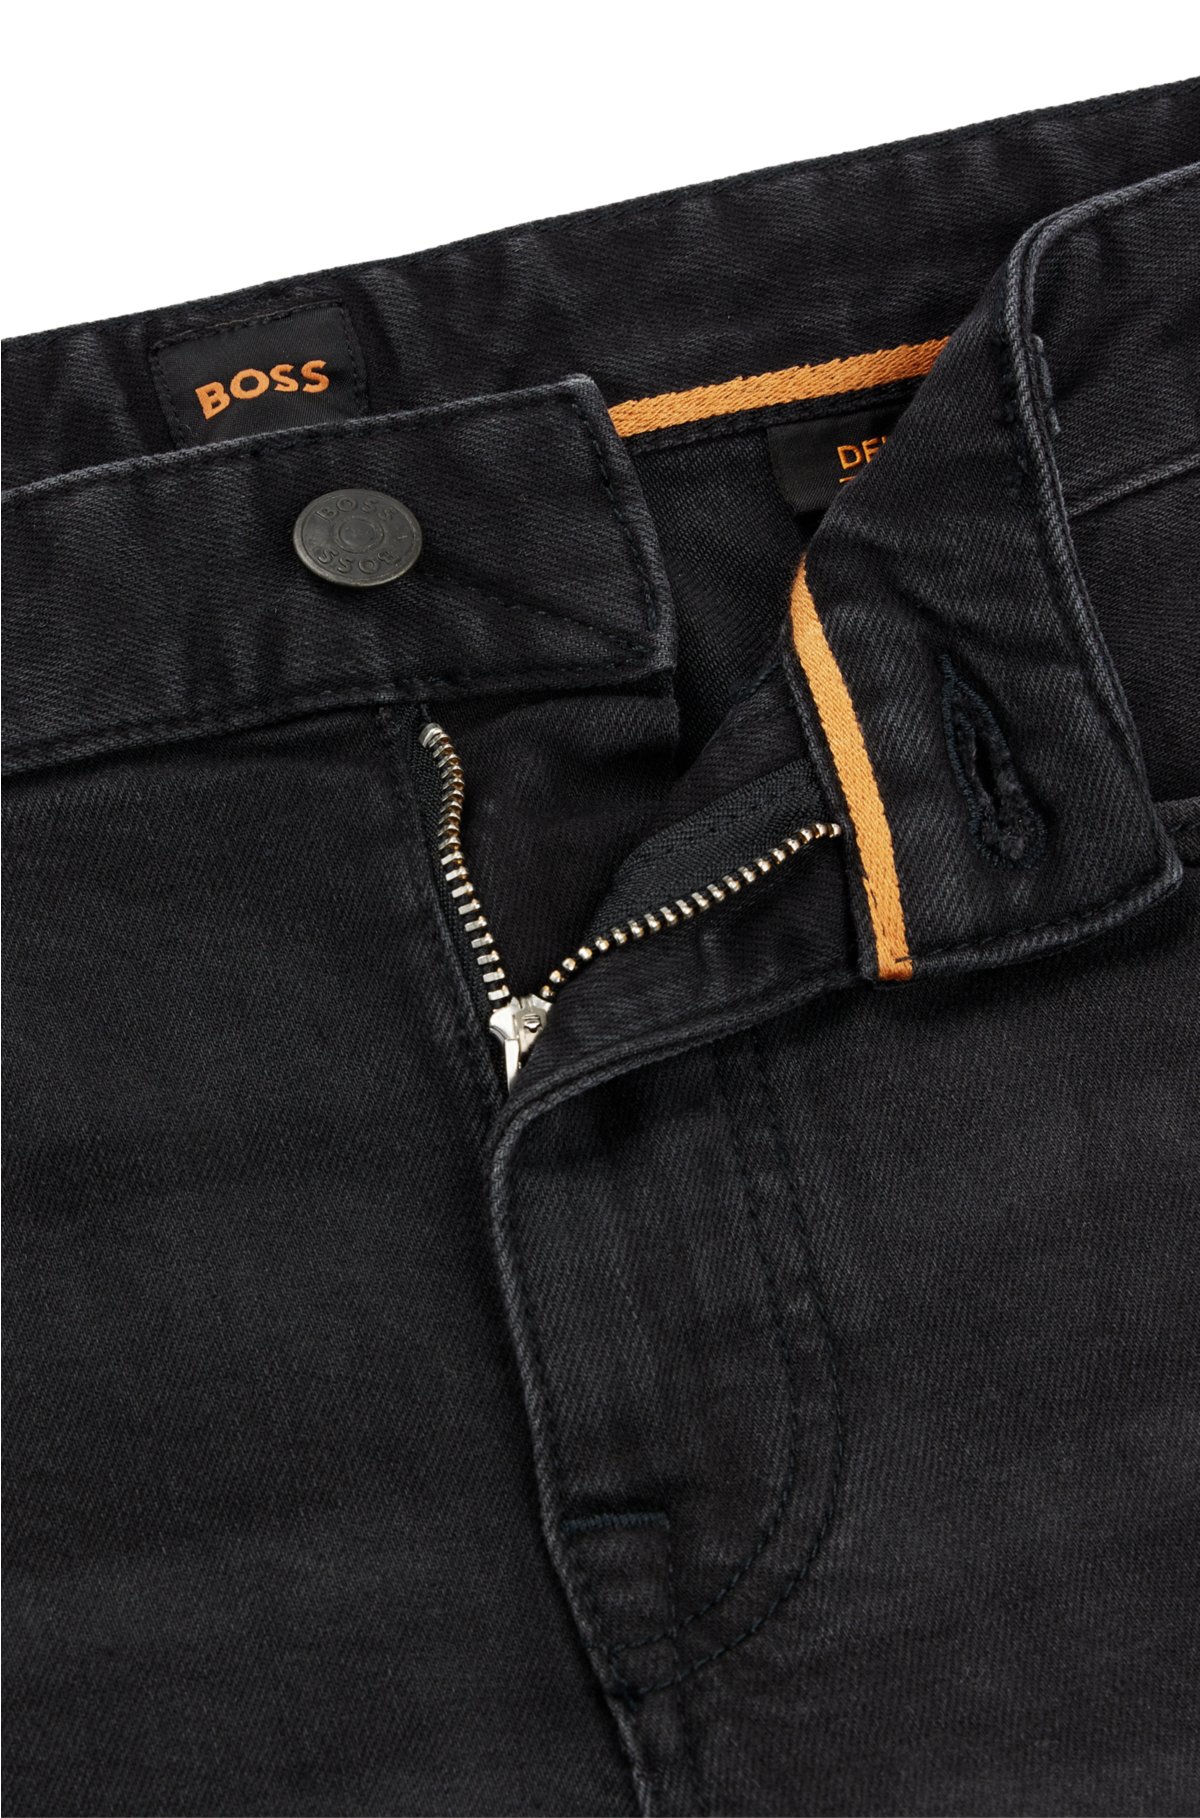 stribe Midler Gylden BOSS - Slim-fit jeans in black super-stretch denim